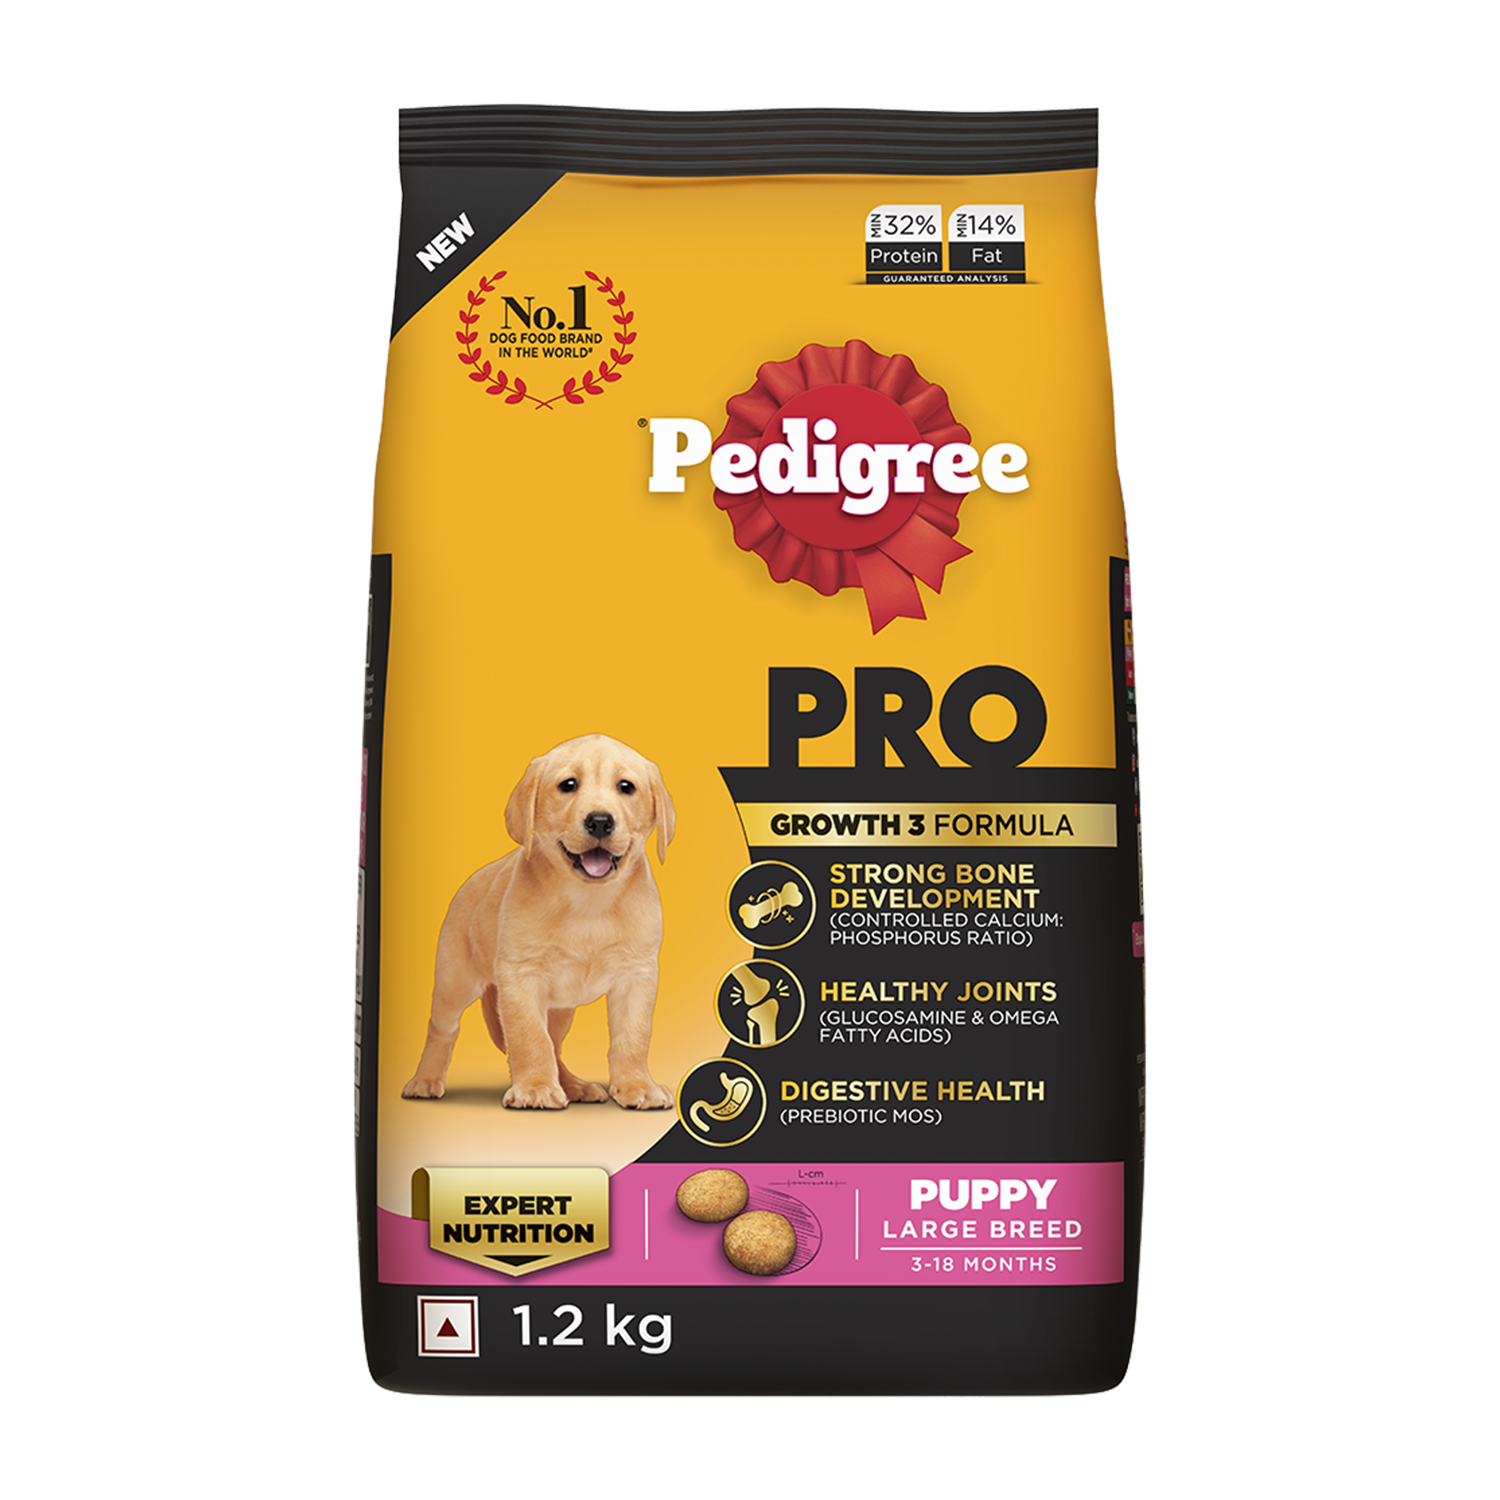 Puppy Large Breed-1.2kg-f | pedigree | dog food | petzsetgo